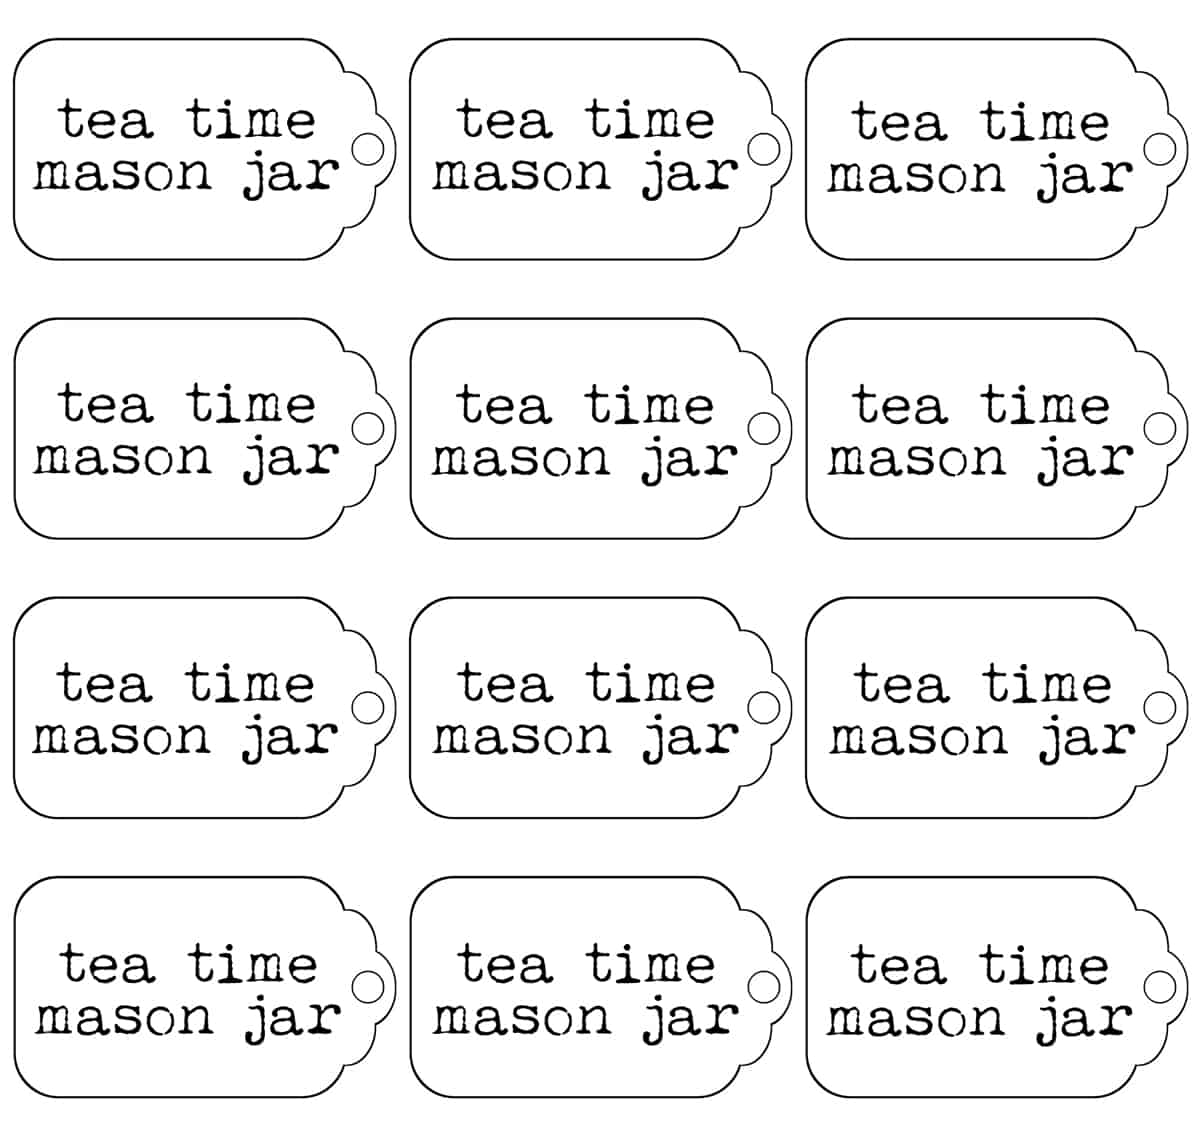 Mason Jar Tea Time